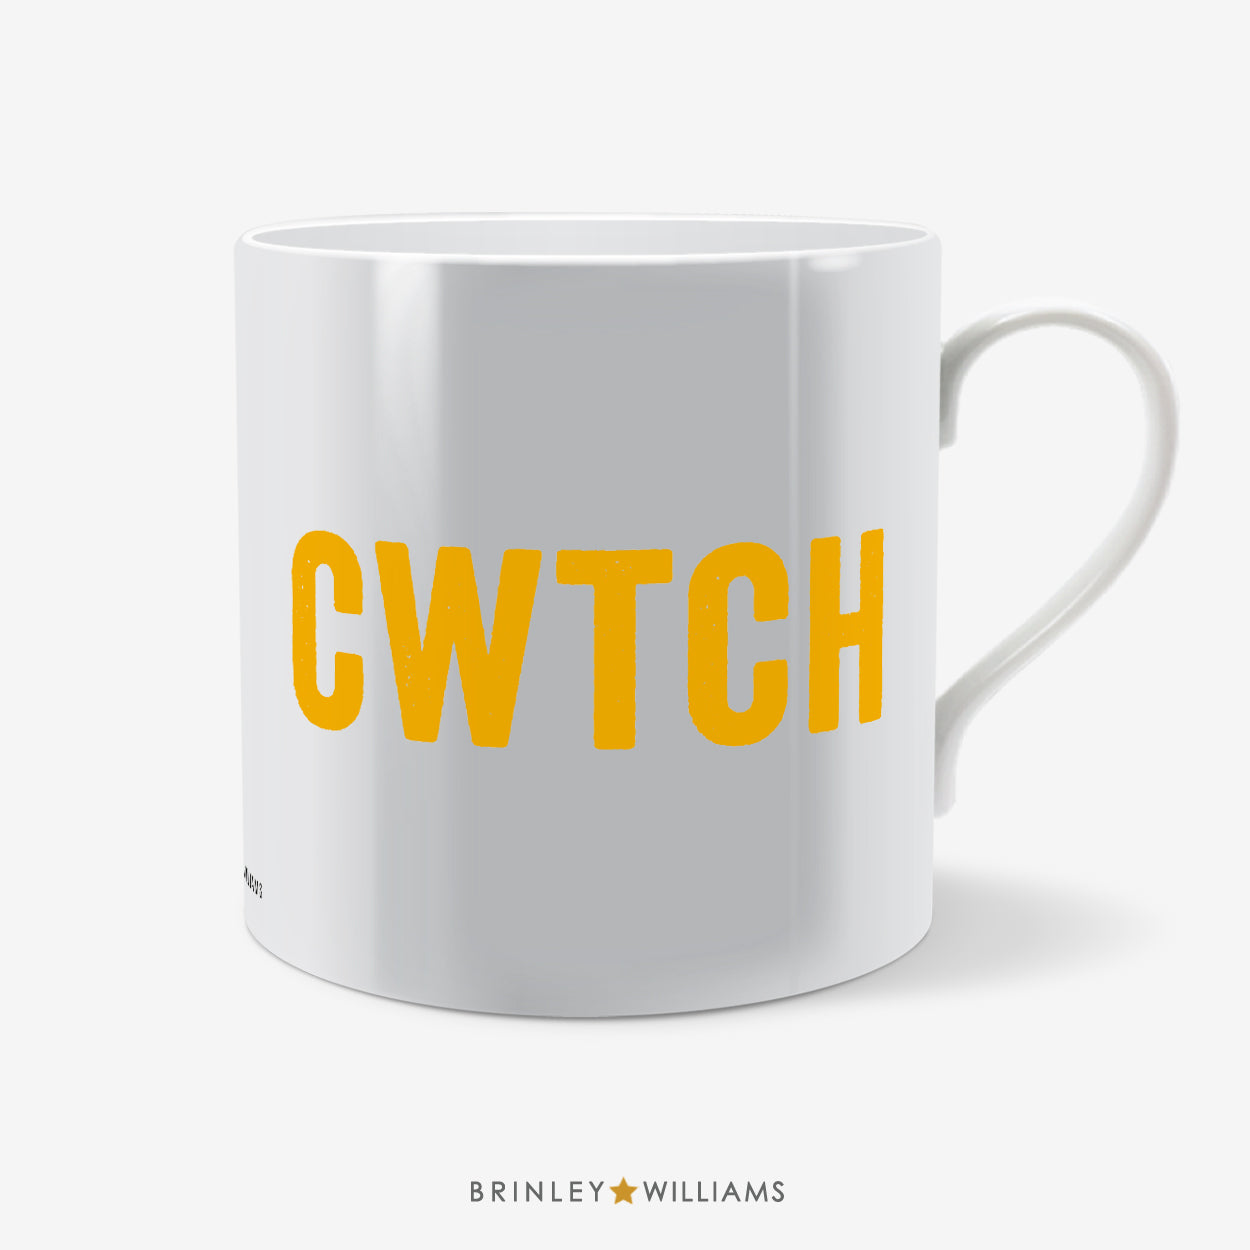 Cwtch Welsh Mug - Yellow